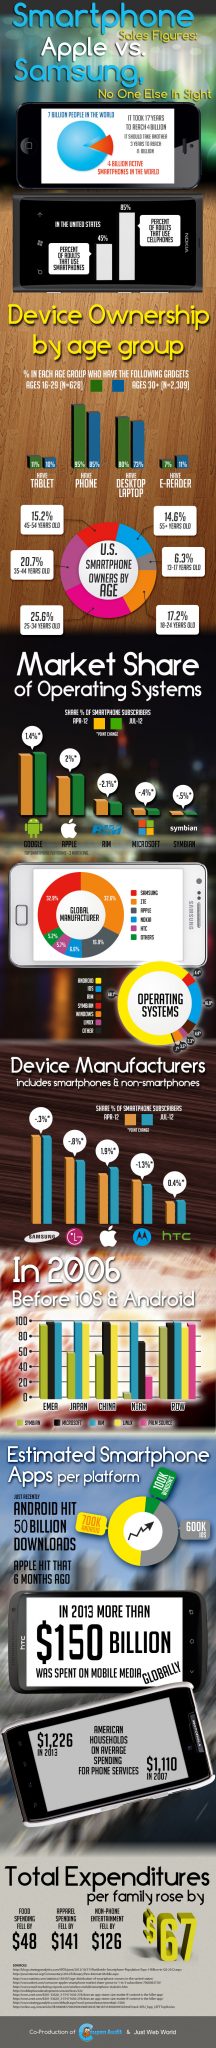 Smartphone-Sales-Figures-Apple-vs-Samsung-No-One-Else-In-Sight